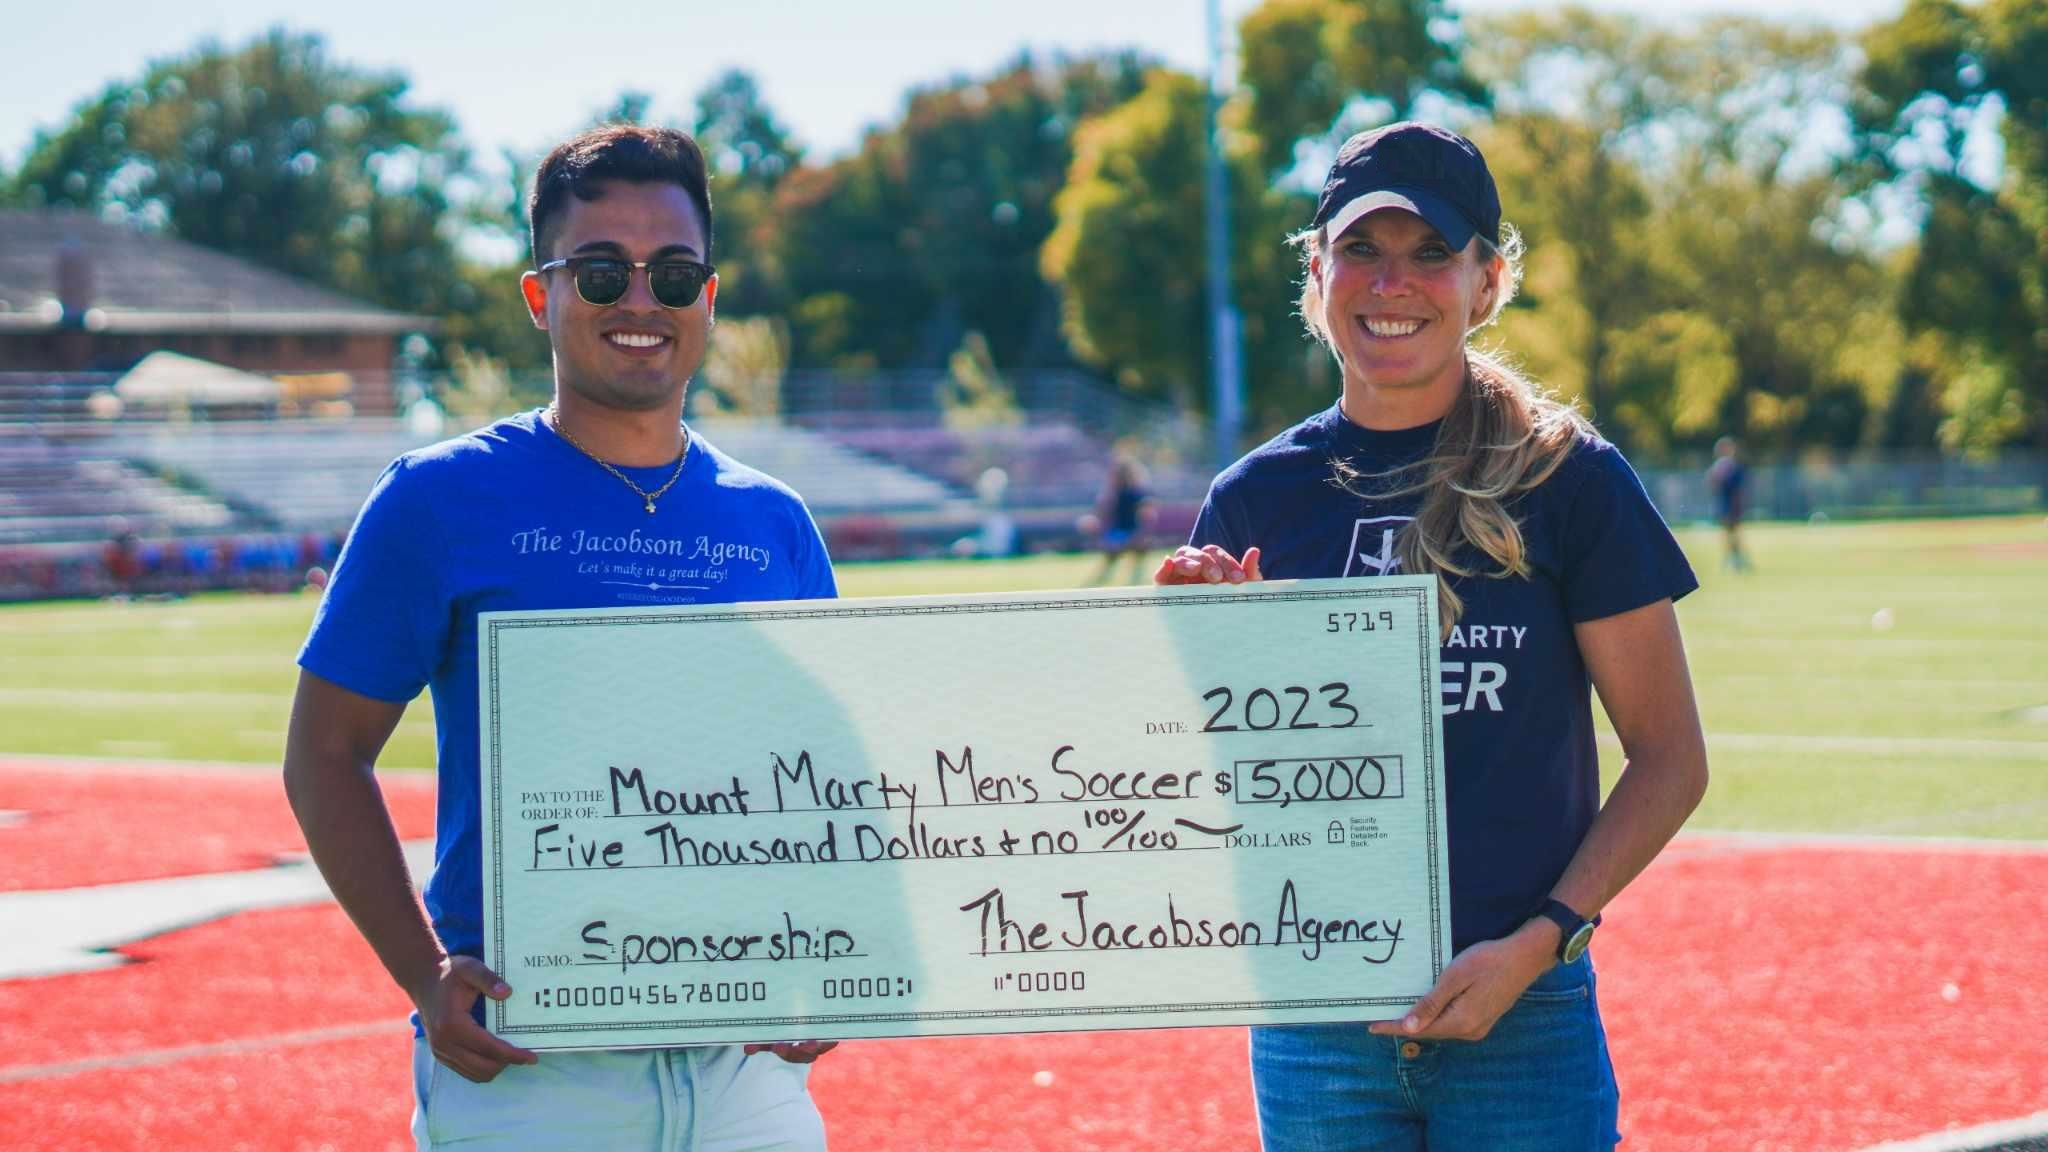 2023 Helping Hands Grant to Mount MartyUniversity Men's Soccer Team